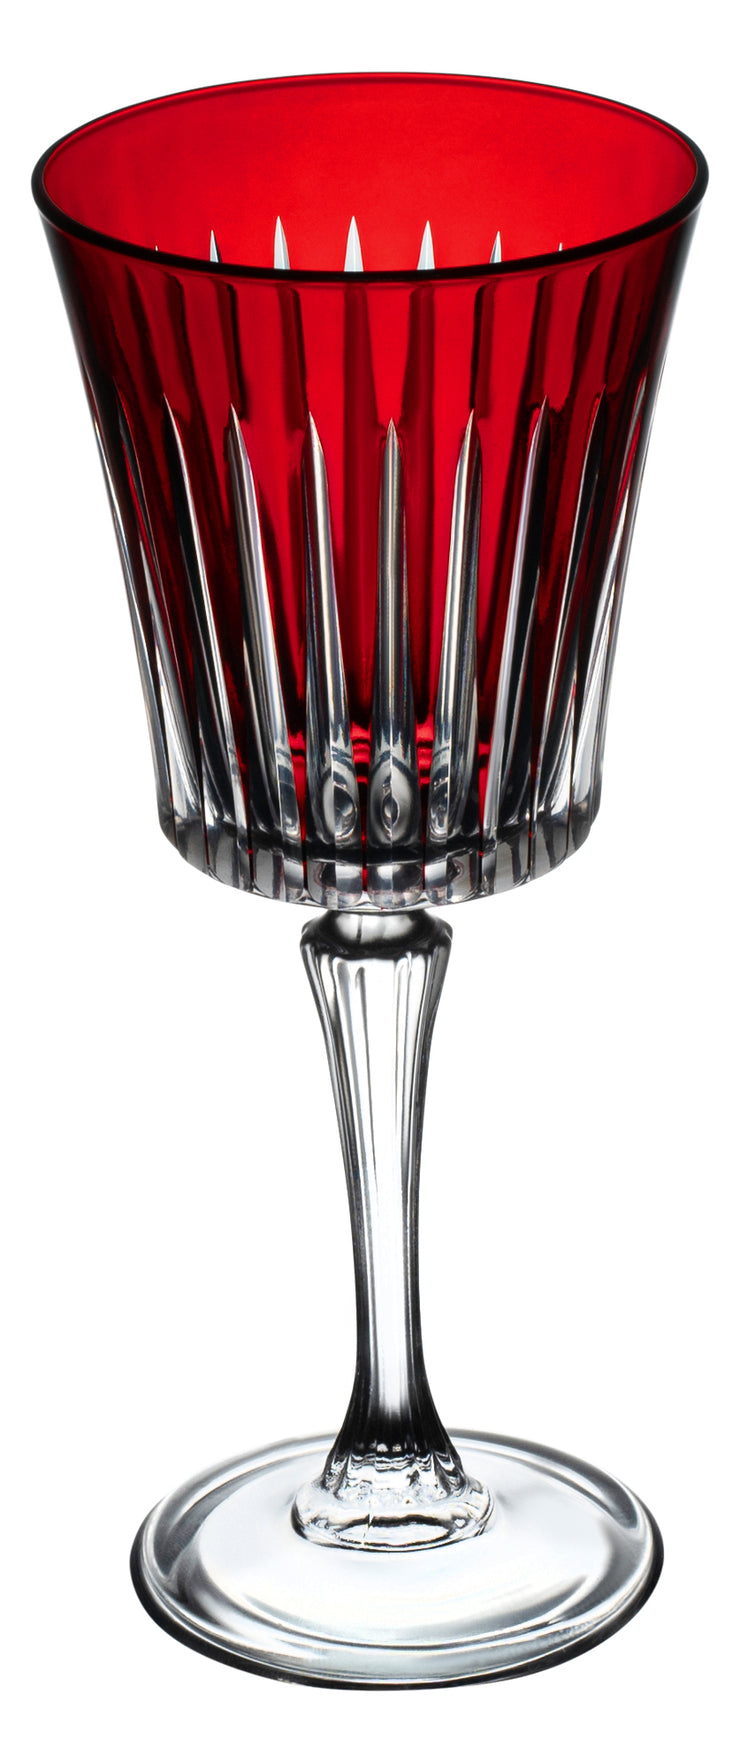 European Glass Red Wine - White Wine - Ruby - Stemmed Glasses - Set of 6 Goblets - 7 oz. Beautifully Designed